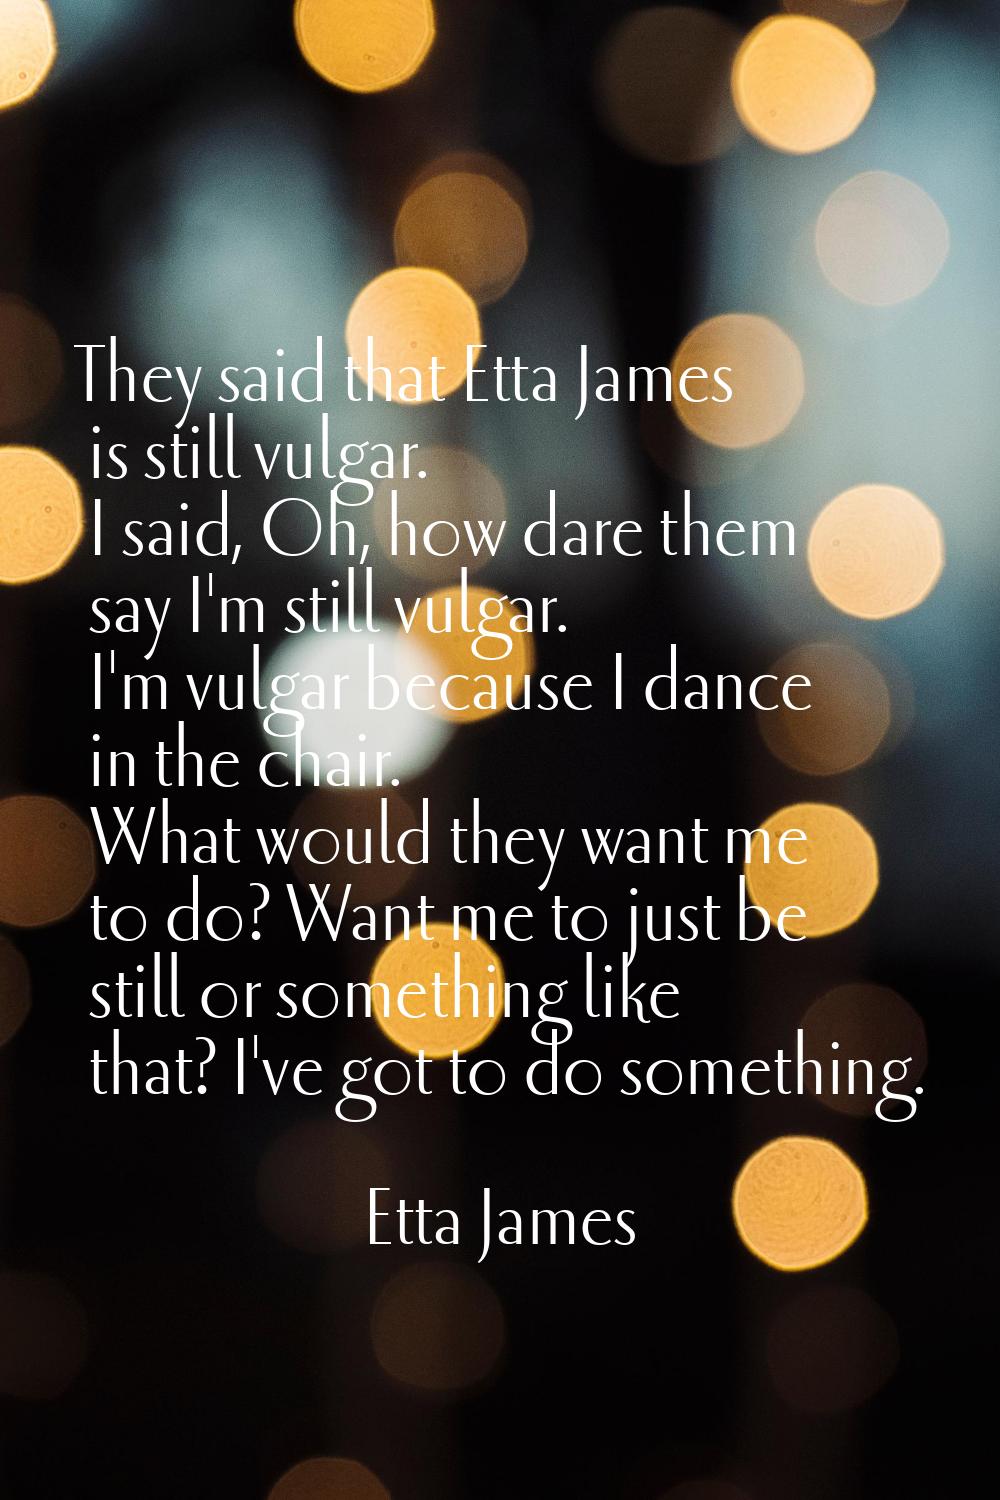 They said that Etta James is still vulgar. I said, Oh, how dare them say I'm still vulgar. I'm vulg